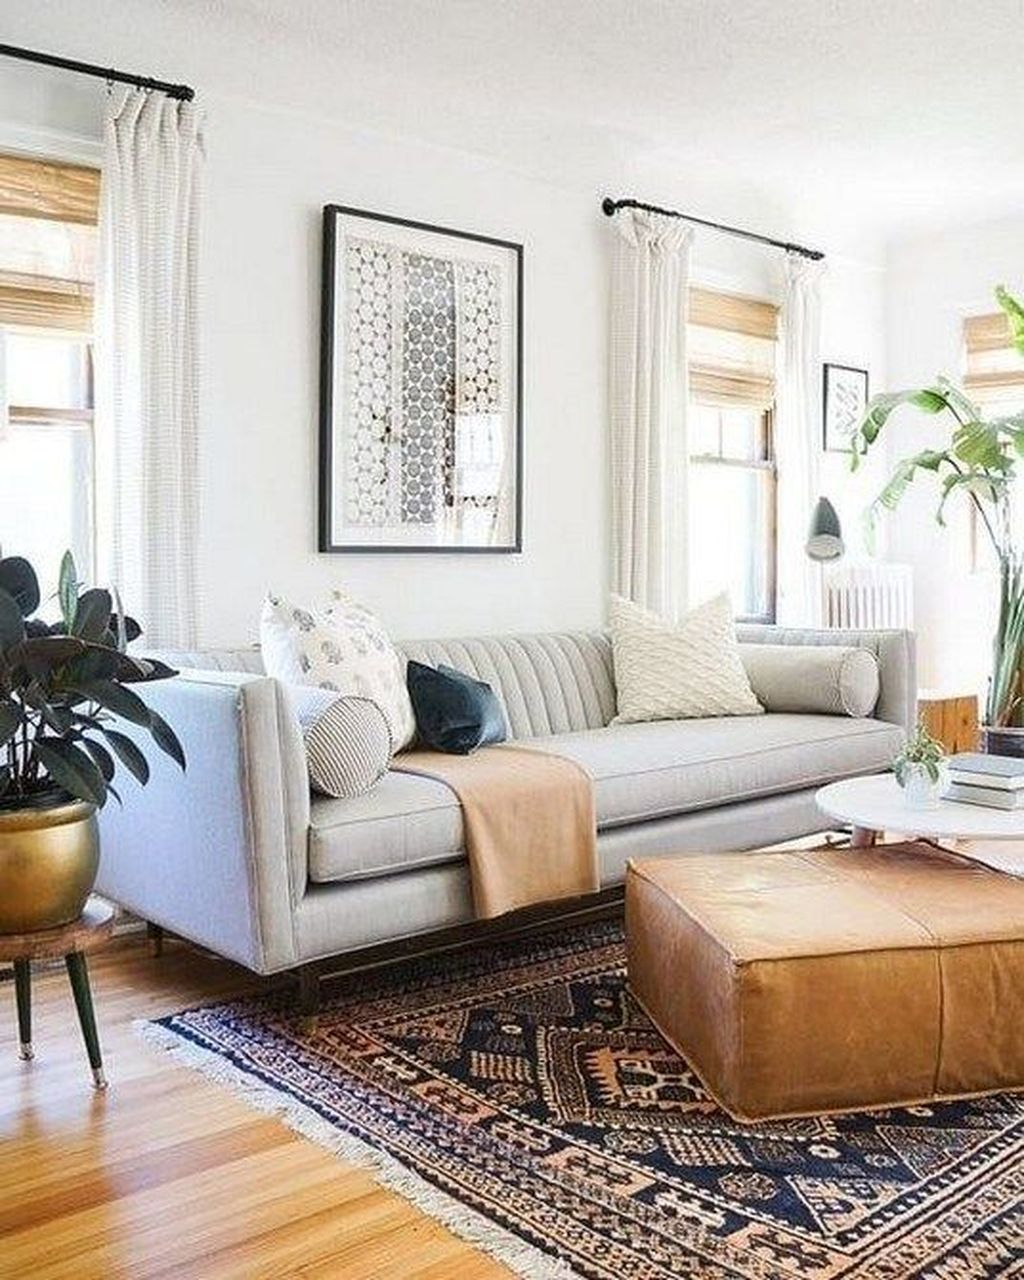 Excellent Furniture Design Ideas For Your Living Room 18